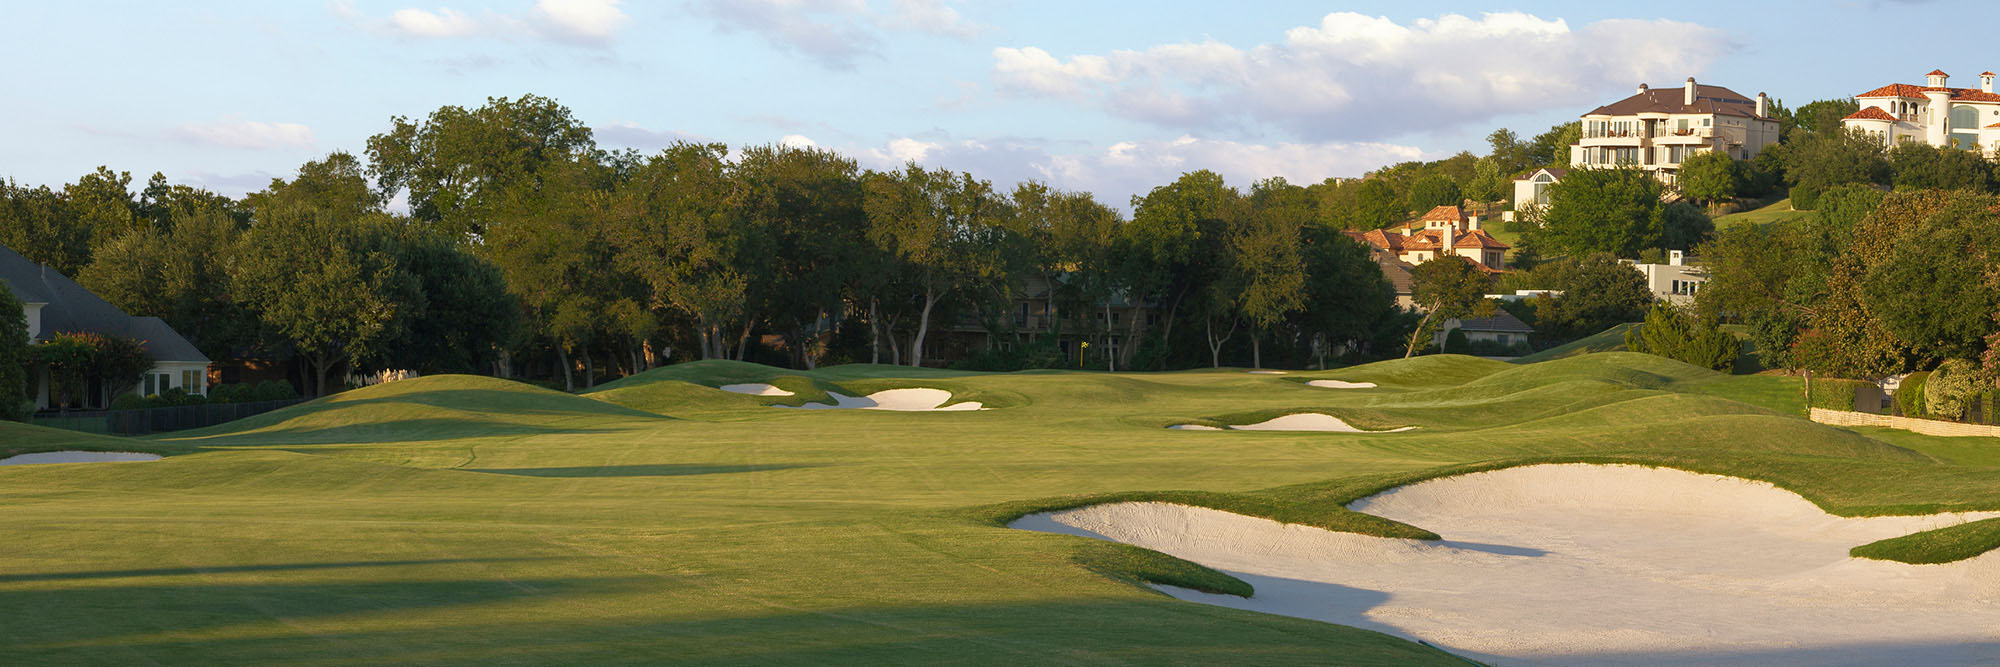 Golf Course Image - Mira Vista No. 17